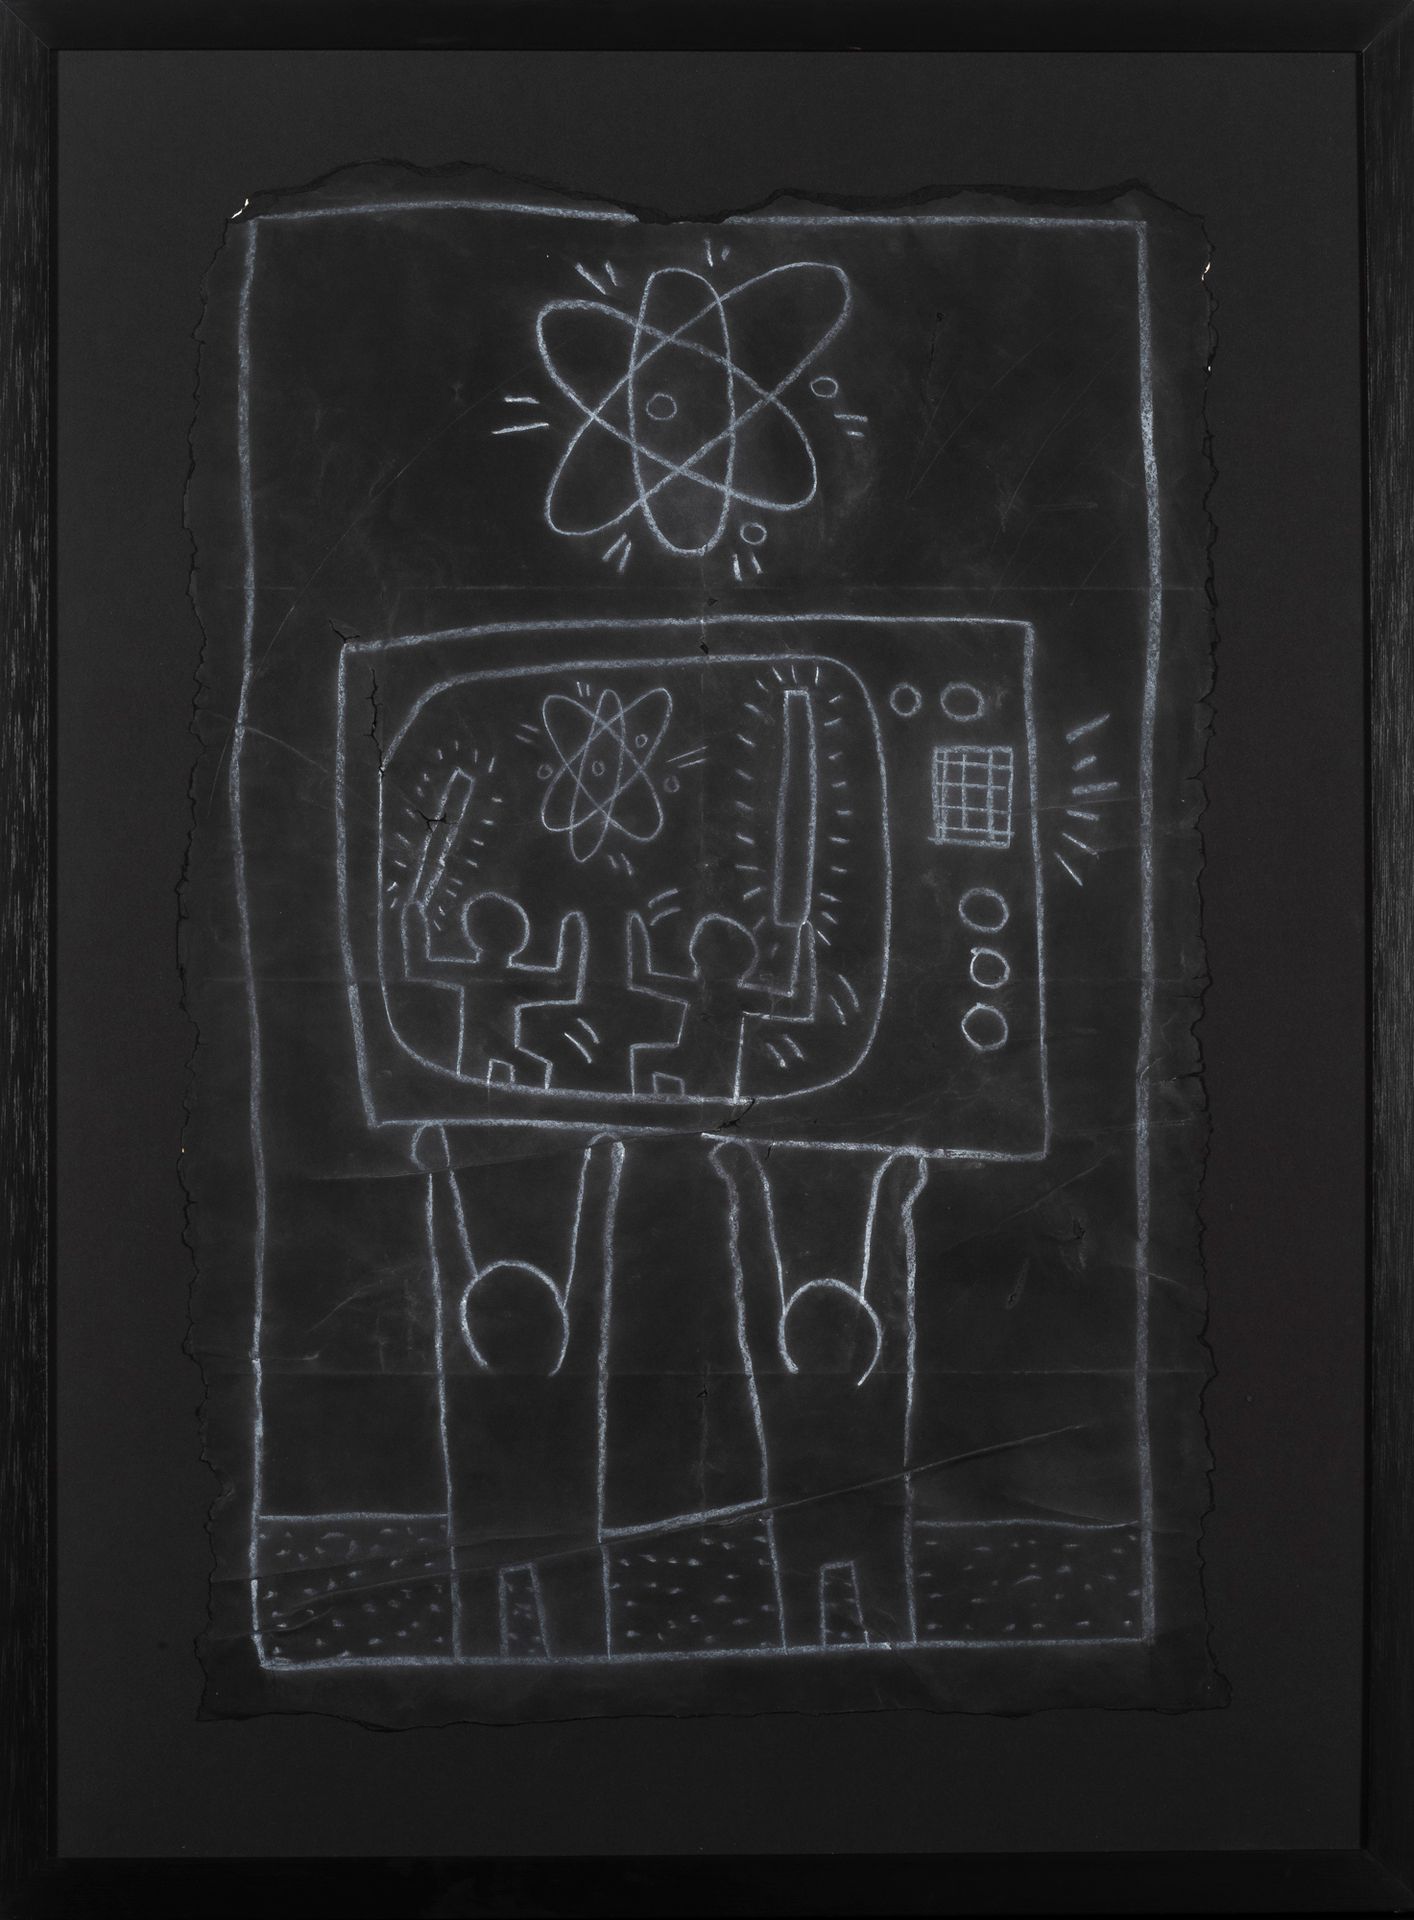 Keith Haring (1958-1990) Dibujo del metro
Tiza sobre papel negro.
Krijt op zwart&hellip;